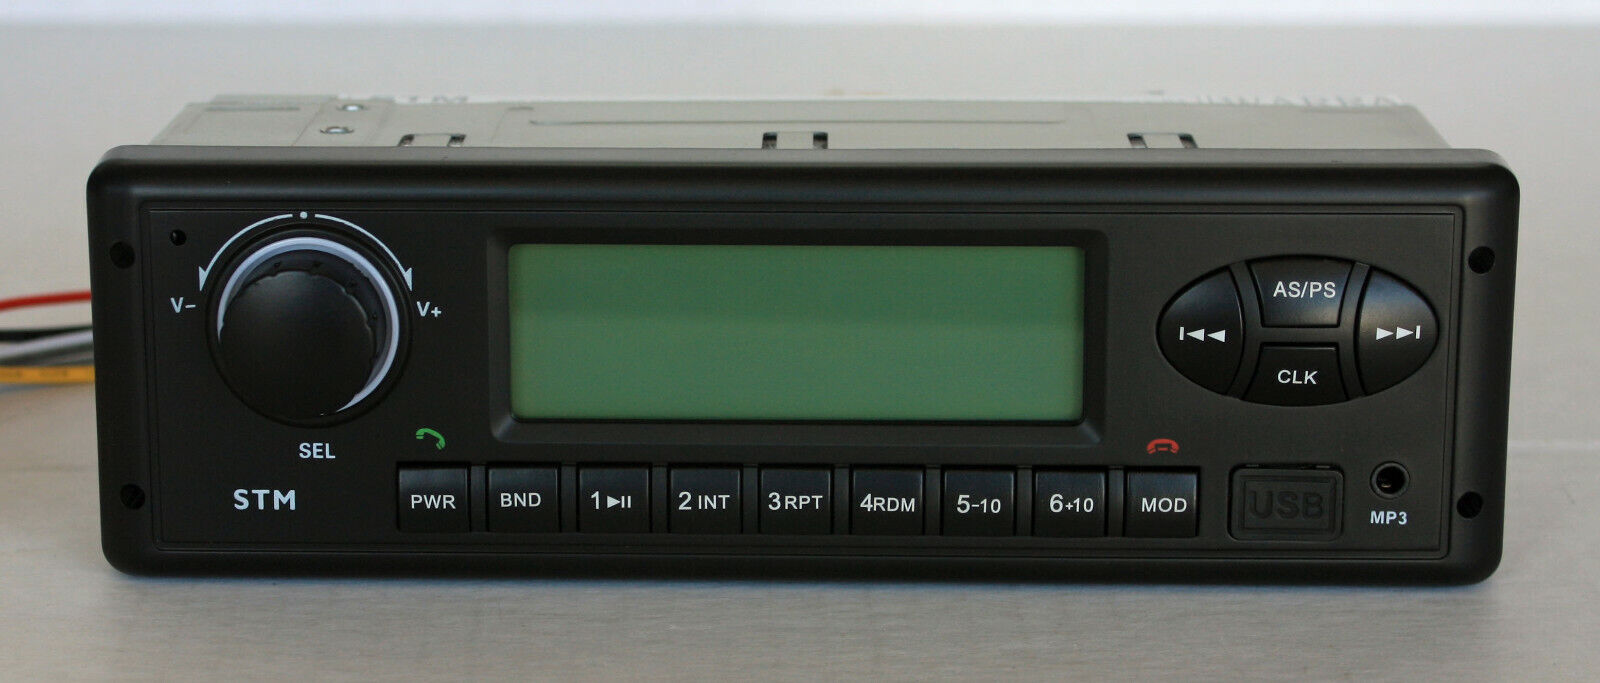 24 volt radio for Komatsu Dozer D61-D65  AM/FM/WB/USB/Aux/ Bluetooth